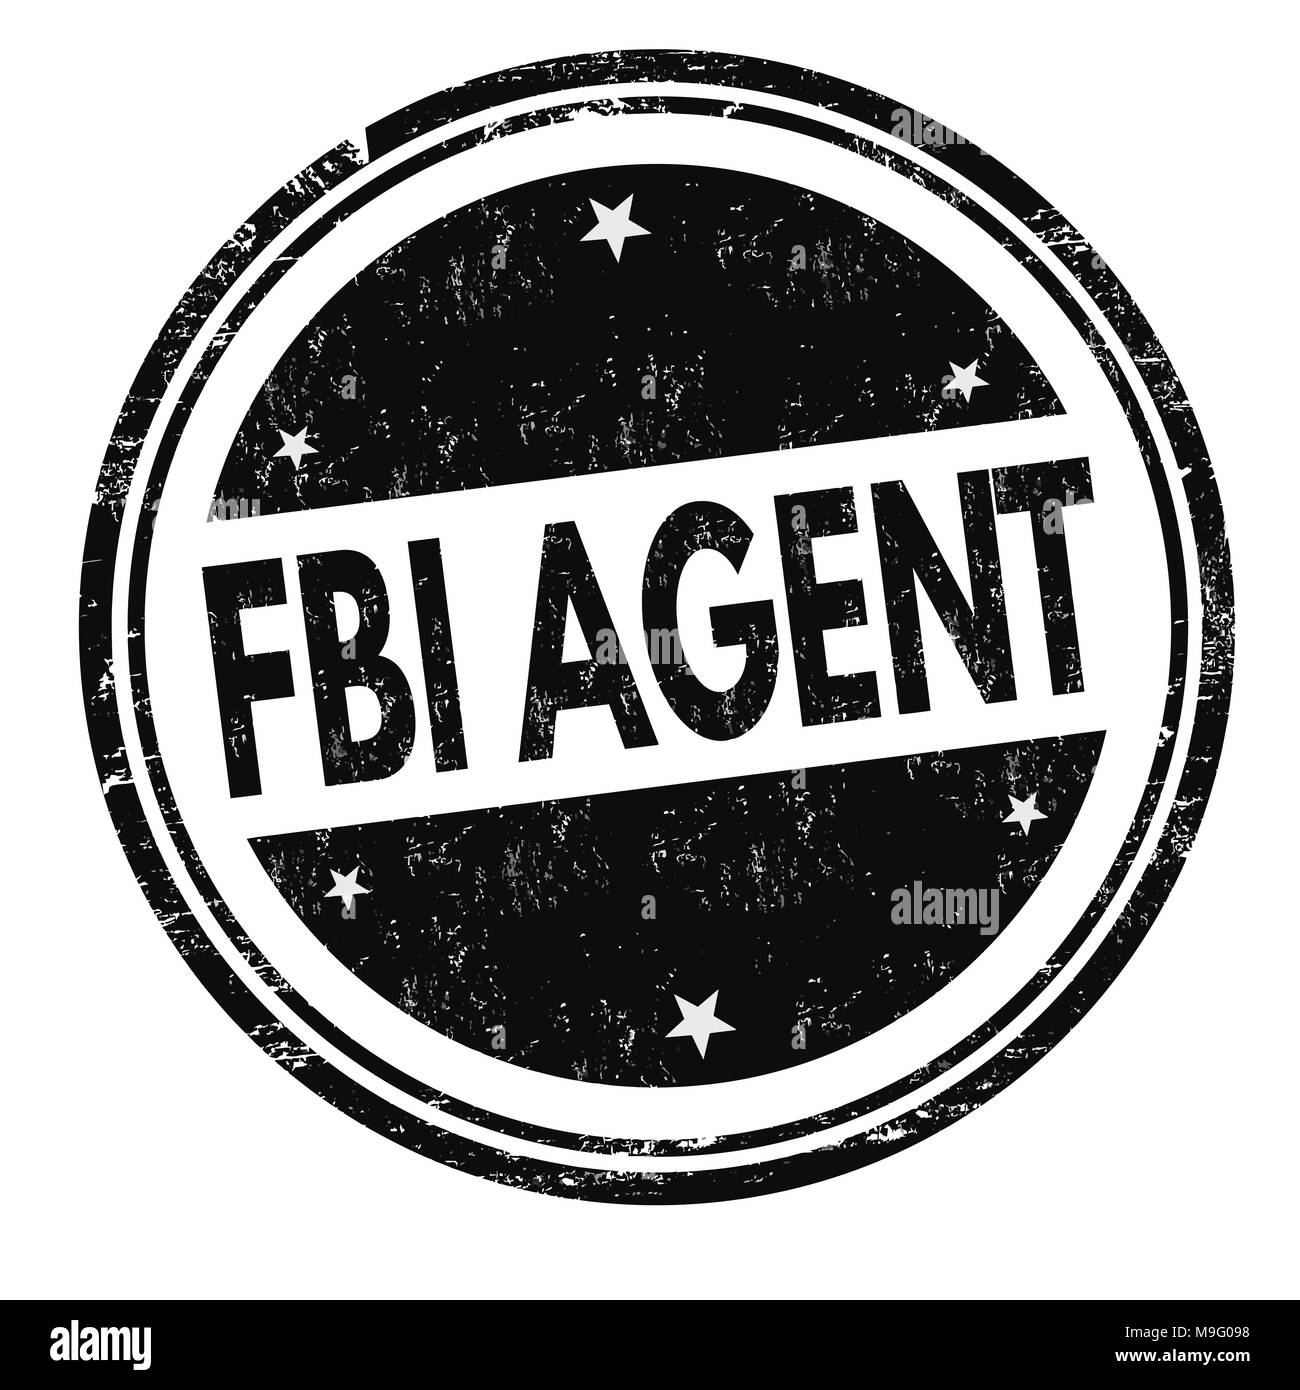 FBI agent grunge rubber stamp on white background, vector illustration Stock Vector